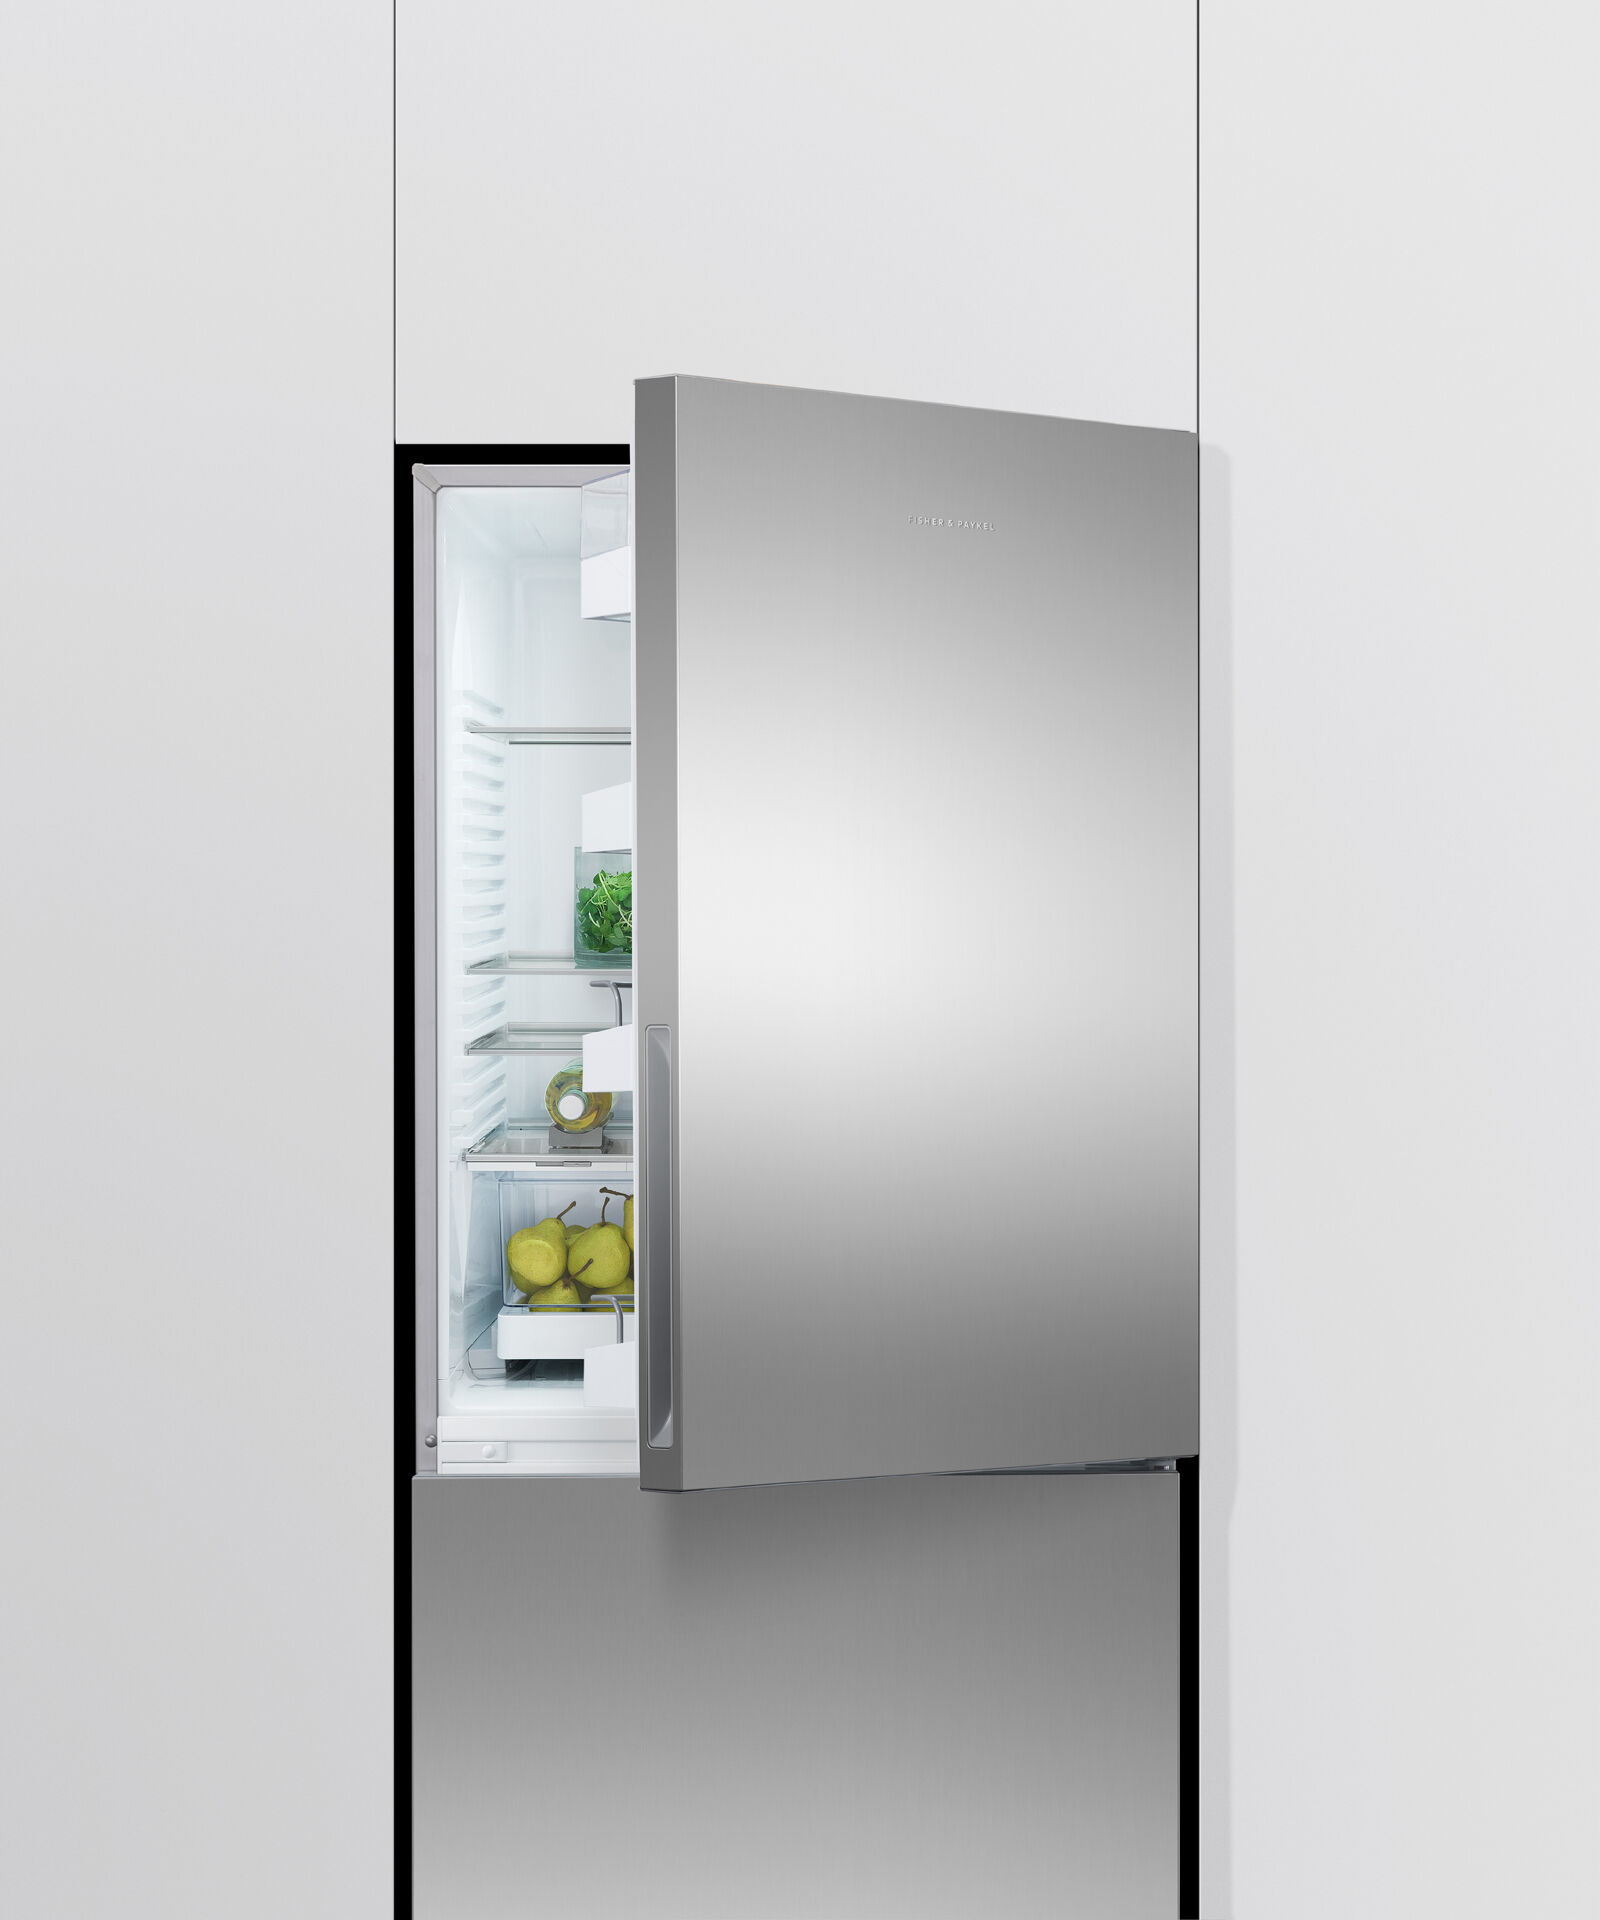 獨立式雪櫃冷凍櫃, 79cm gallery image 5.0